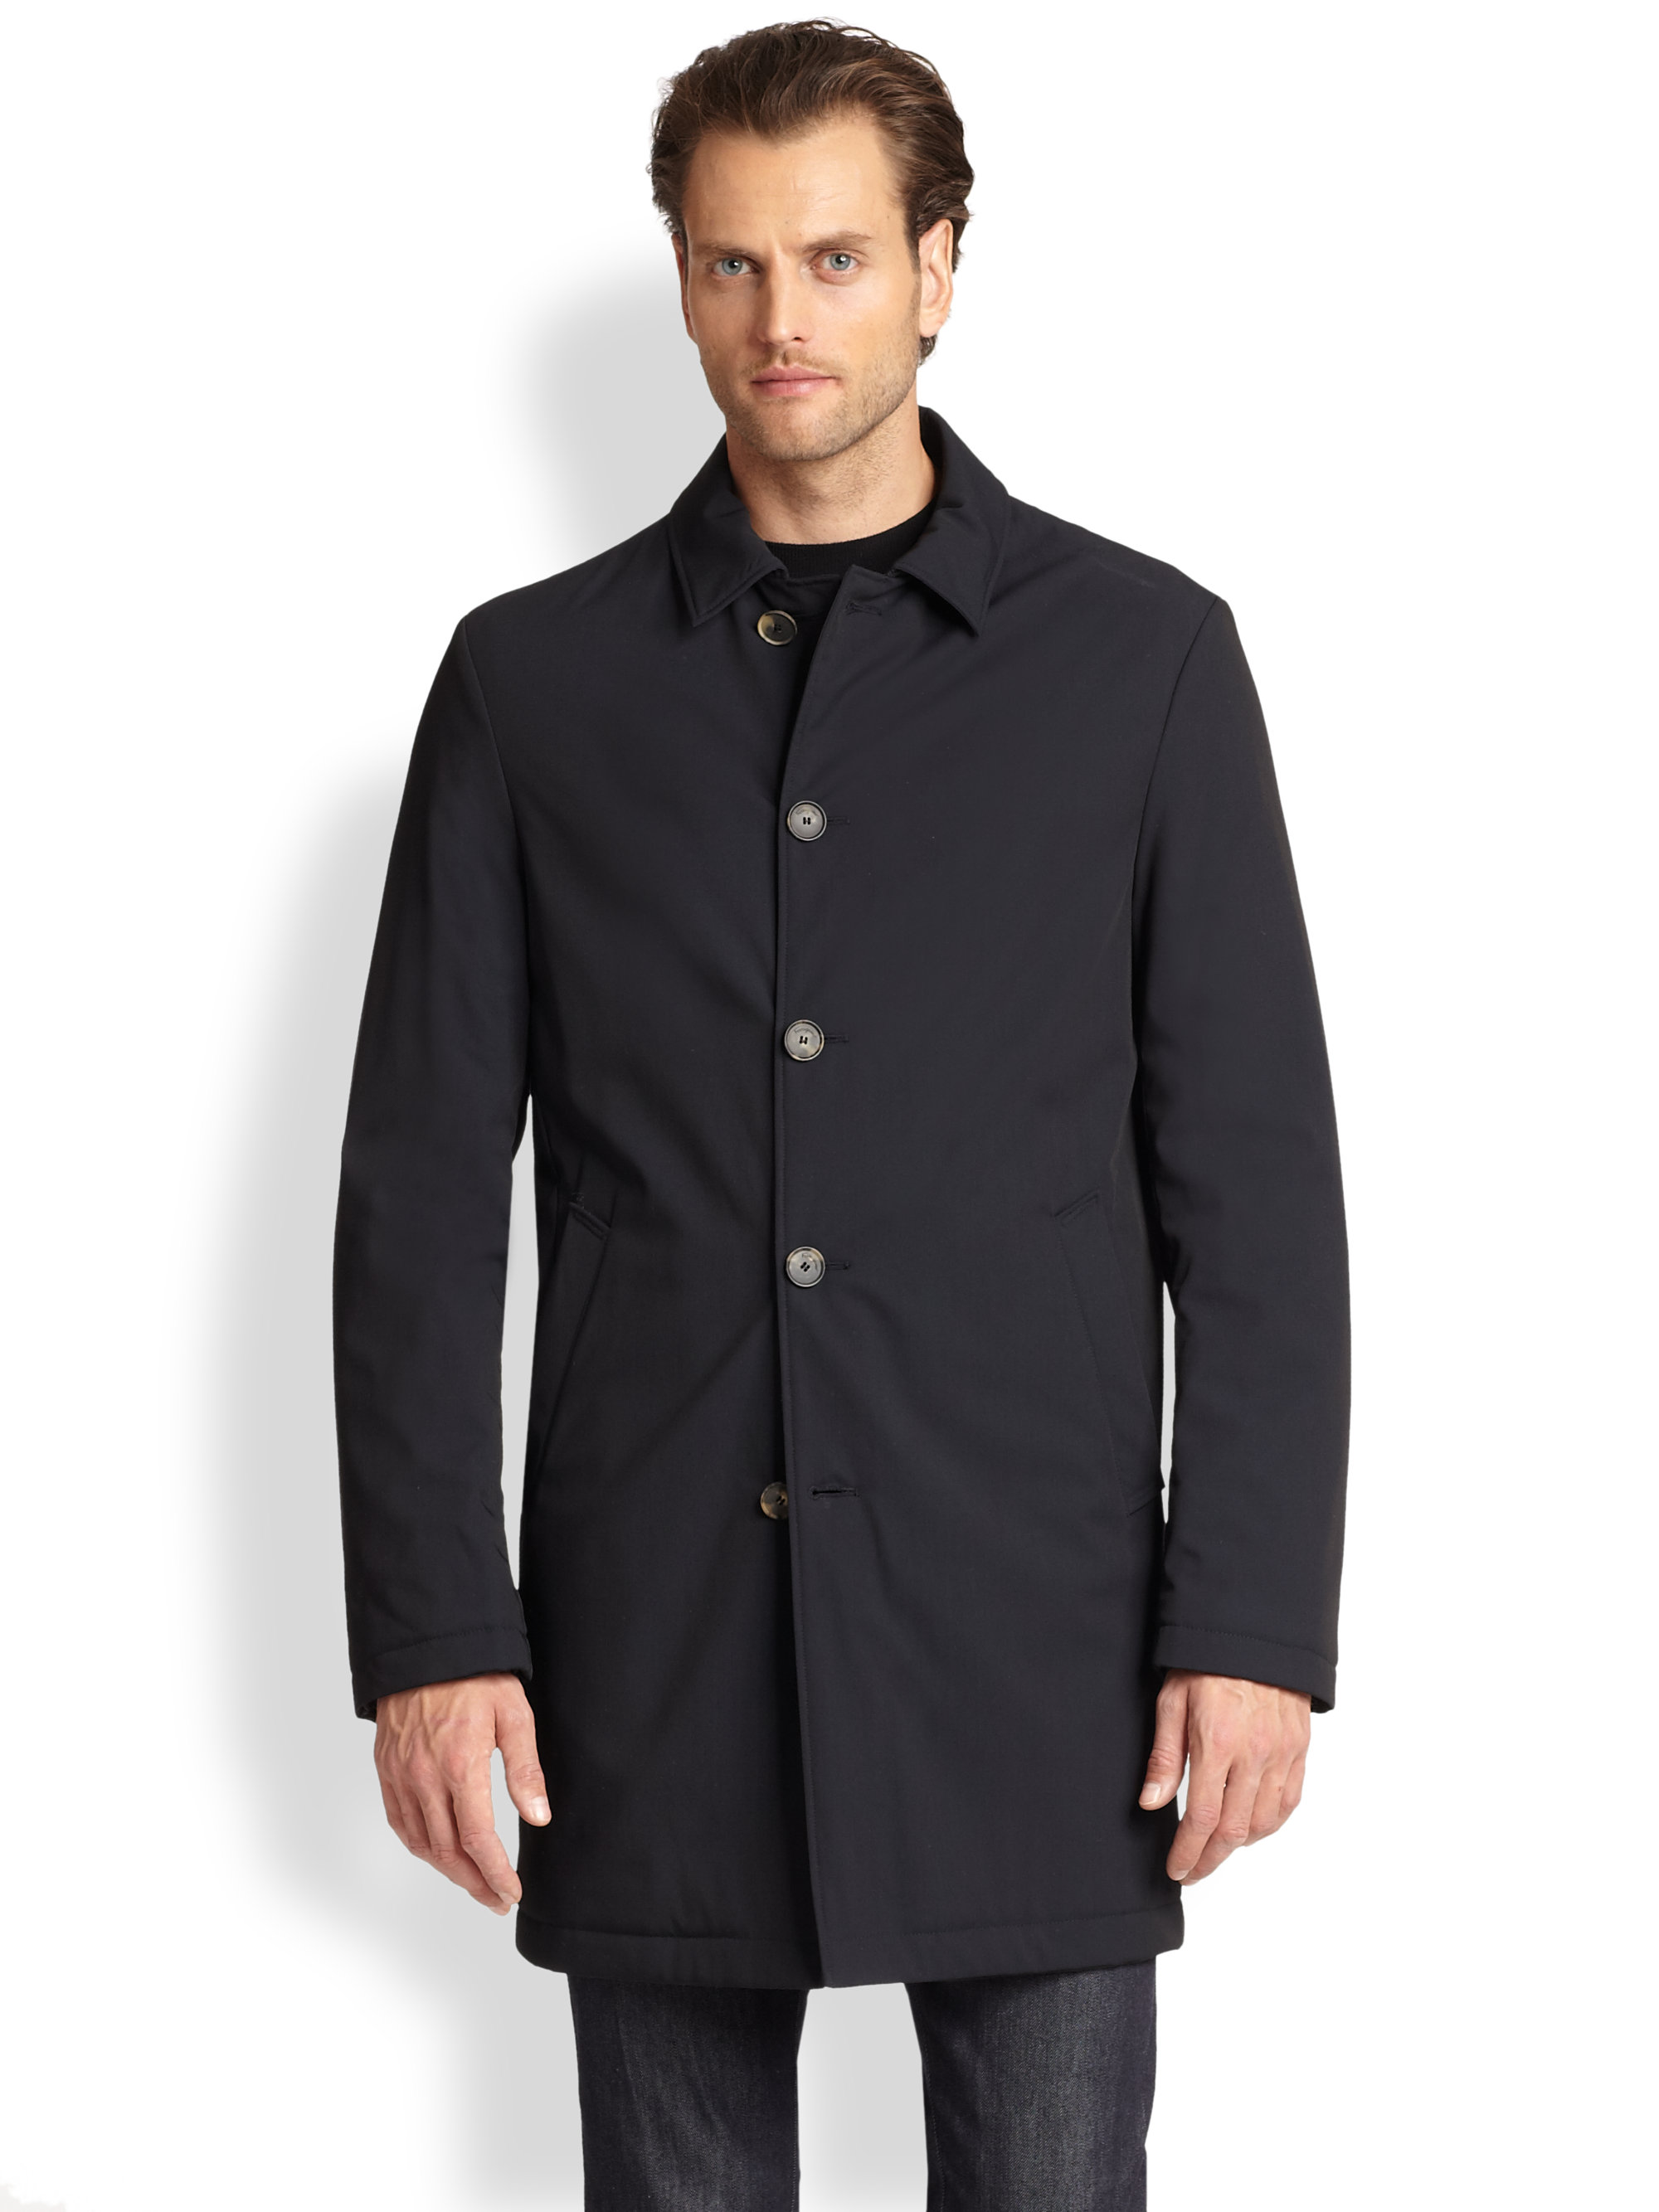 Lyst - Ferragamo Reversible Raincoat in Gray for Men